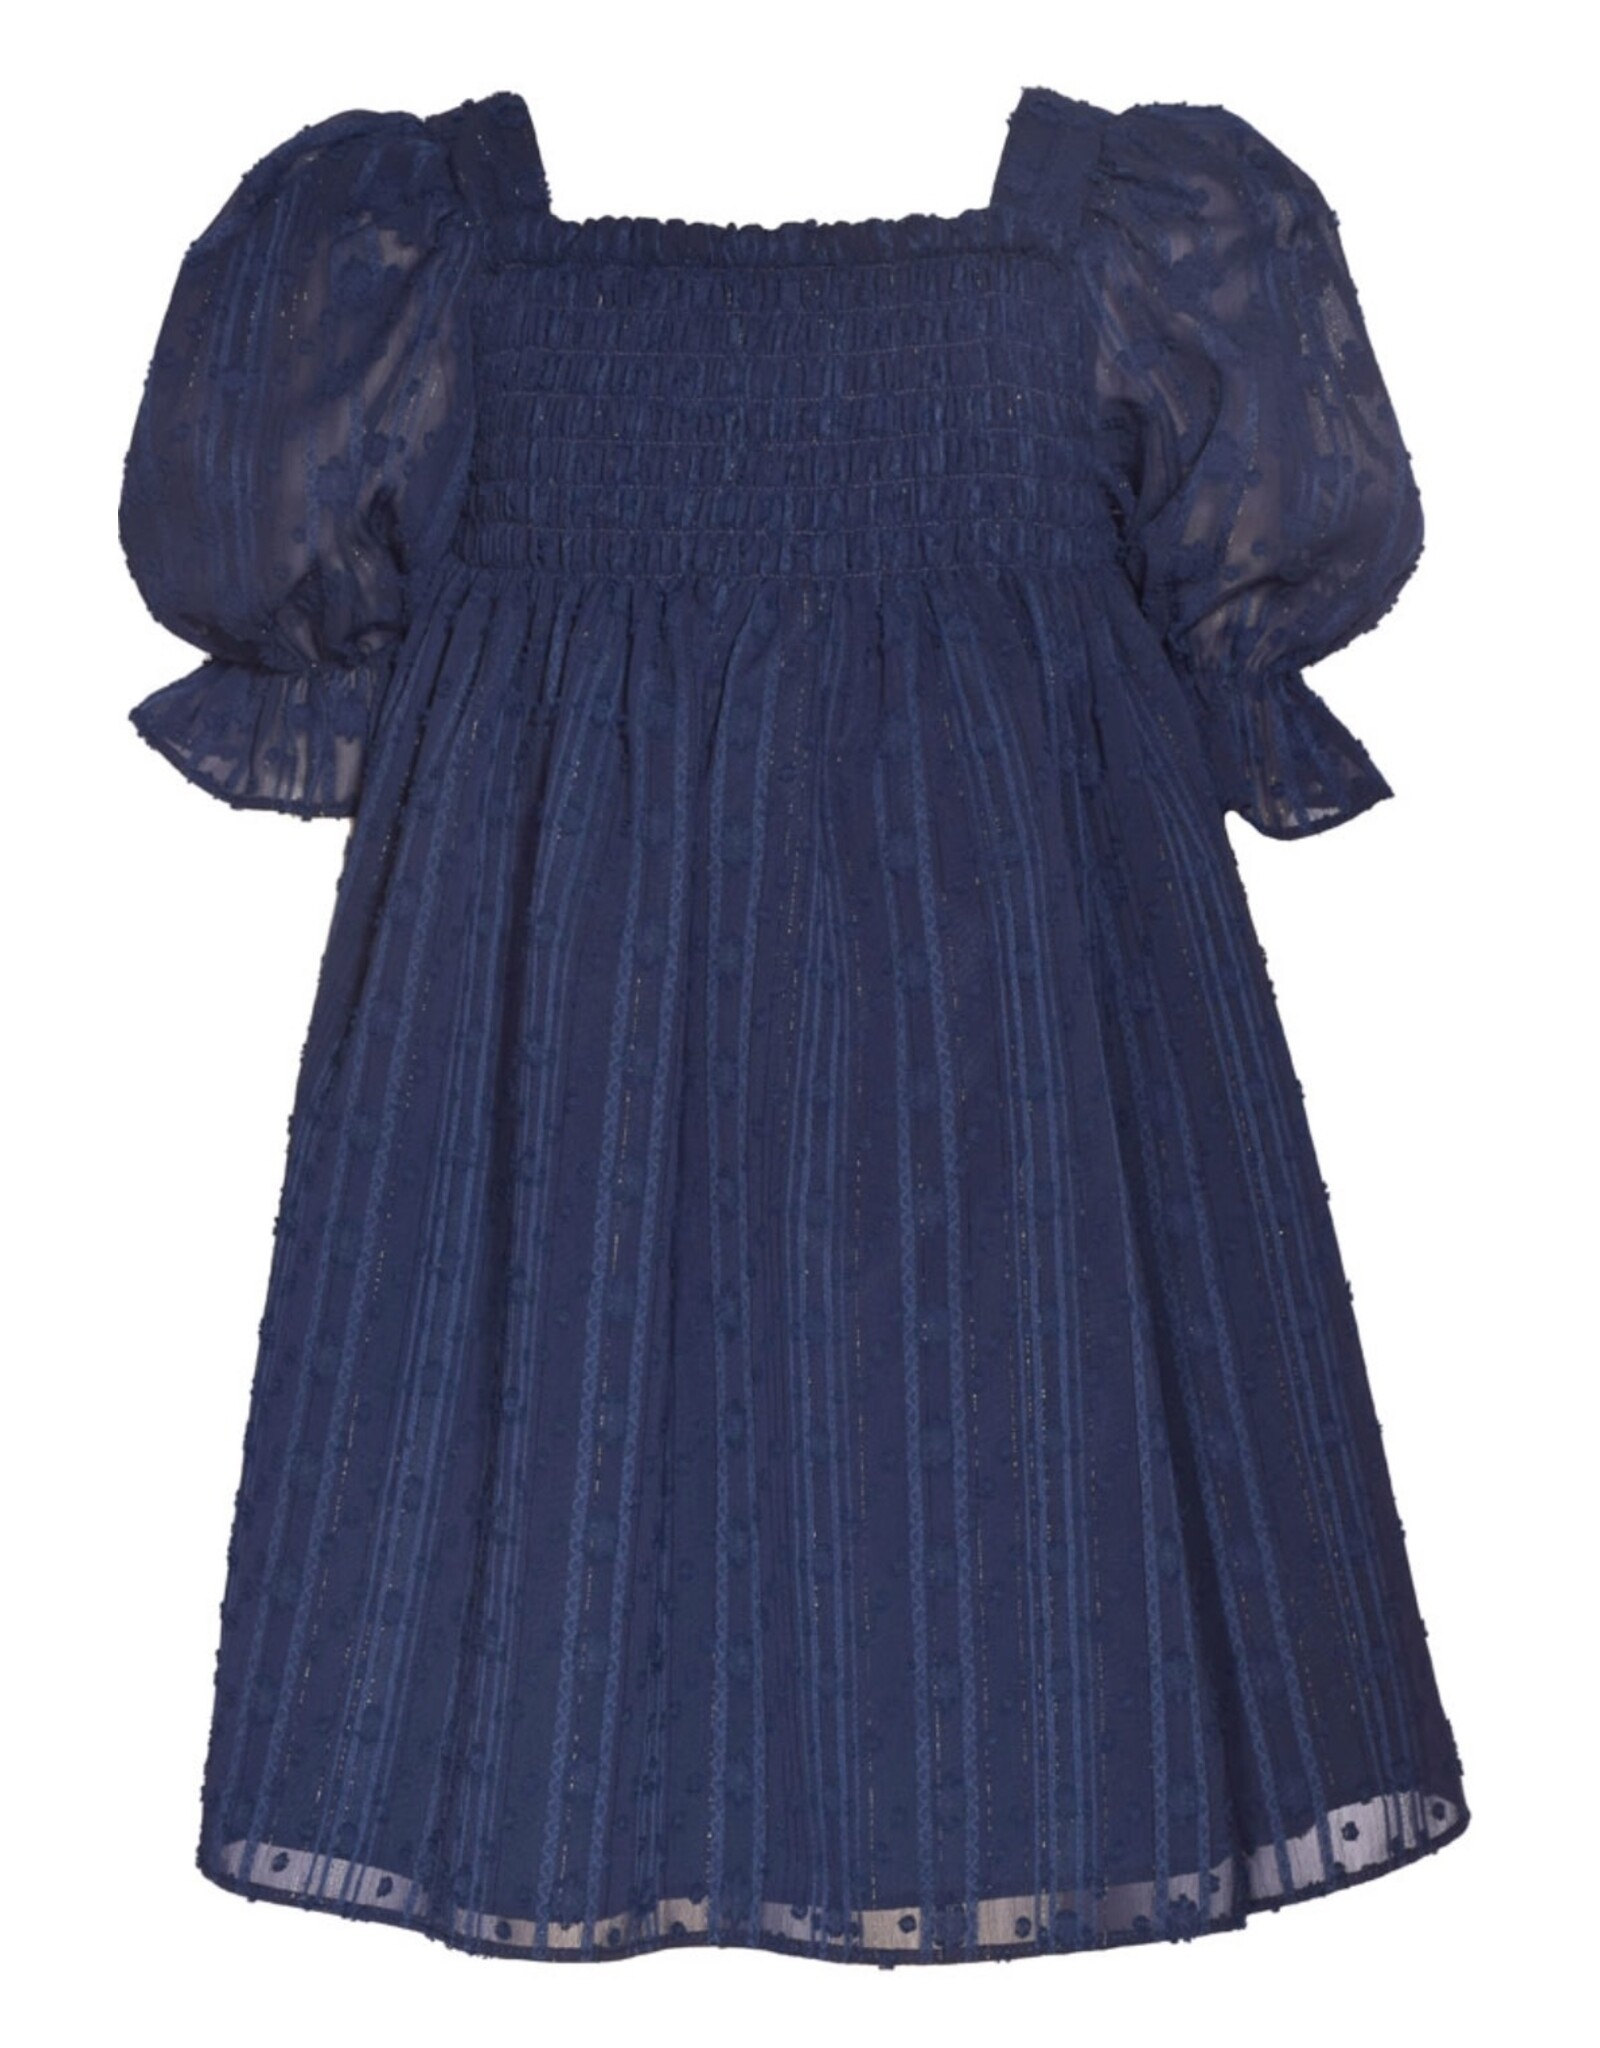 Bonnie  Jean Bonnie Jean- Smocked Clip Dot Navy Dress